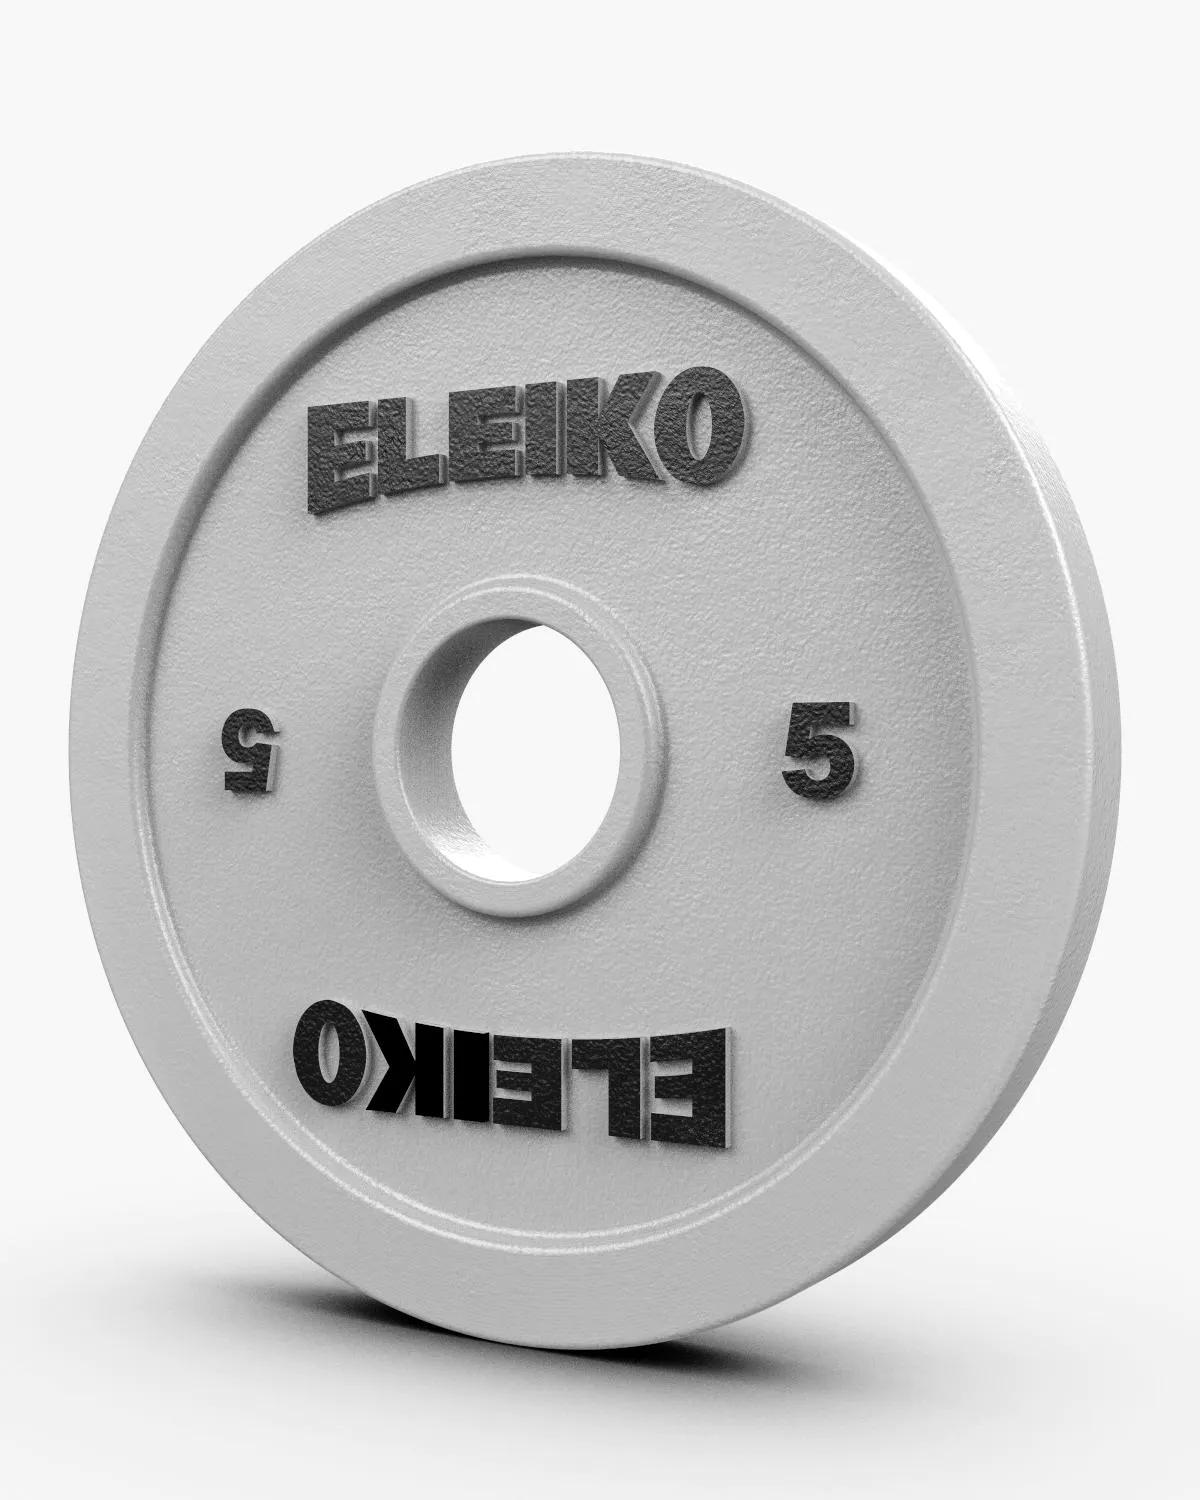 Competition change. Eleiko IPF. Комплект штанги Eleiko для соревнований 180 кг. Блин для штанги Eleiko 25 kg. Штанга Элейко.